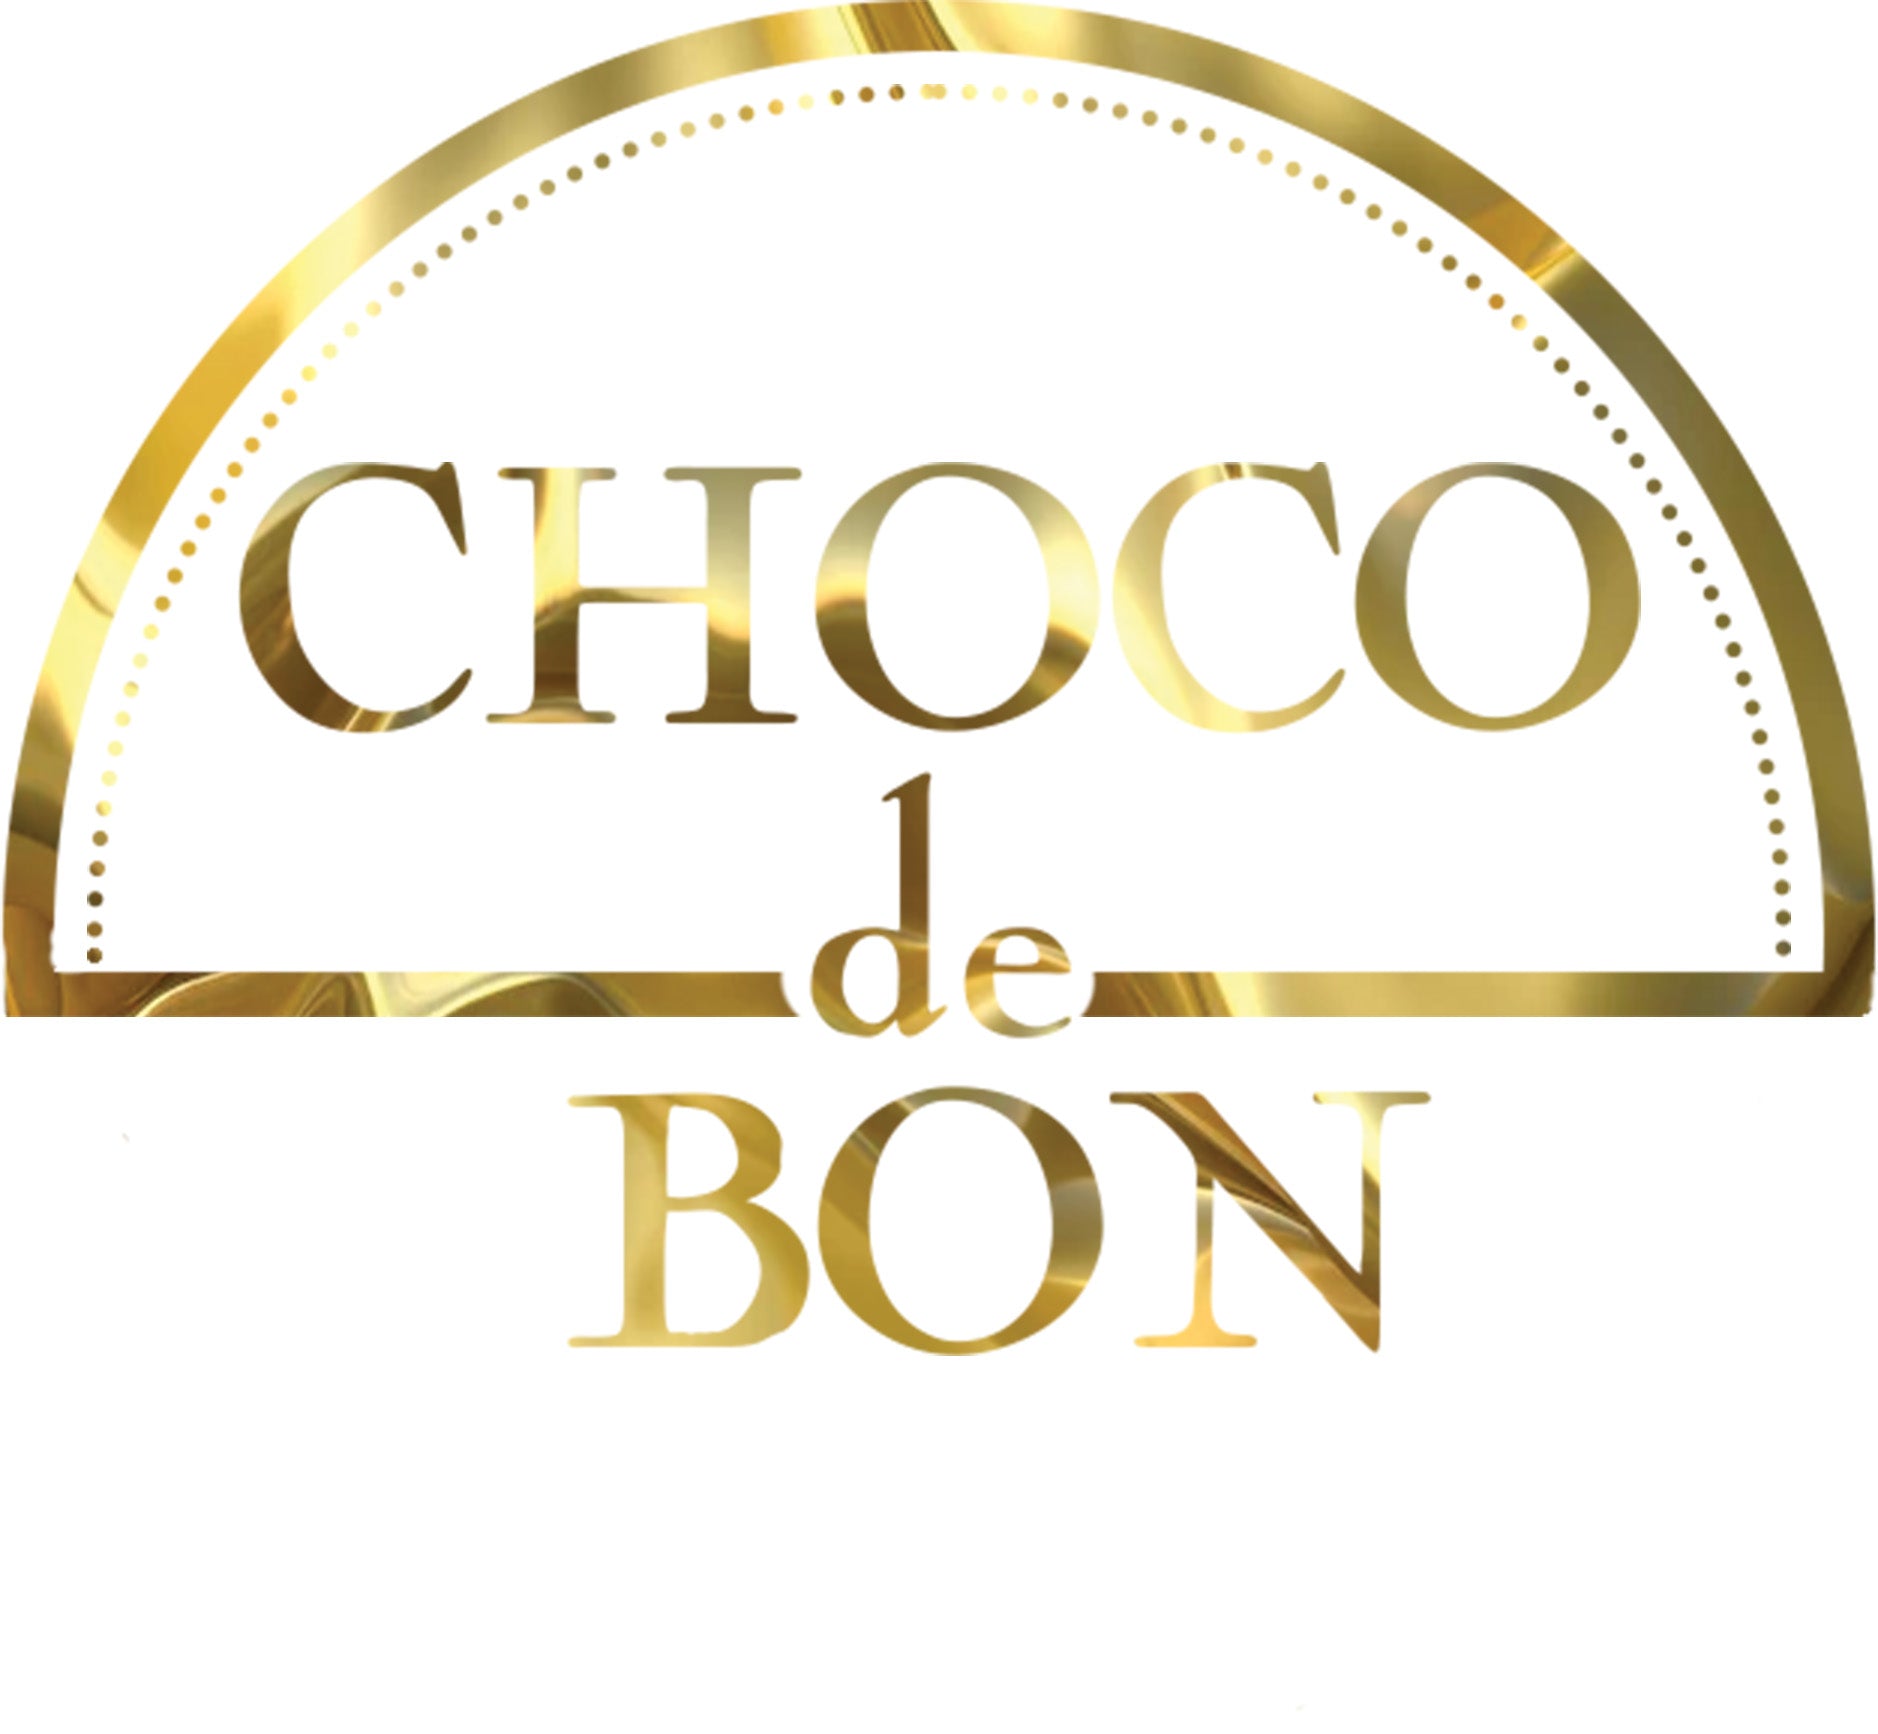 Choco De Bon - Luxury Chocolate and Bonbon